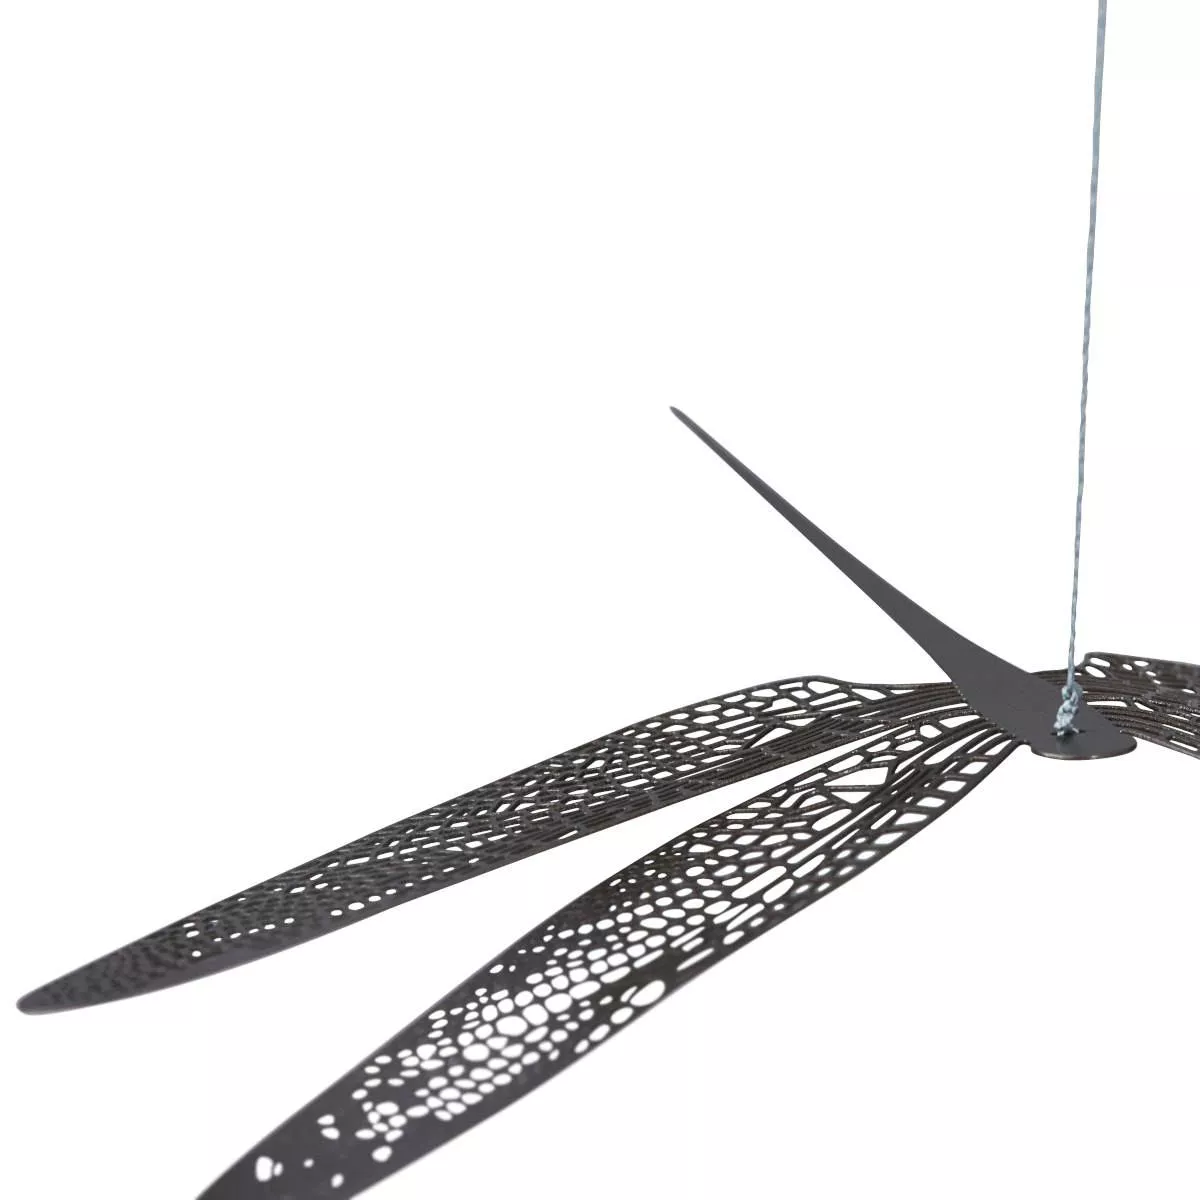 Mobile mit drei filigranen Libellen aus plattiertem Edelstahl (36 x 100 cm)